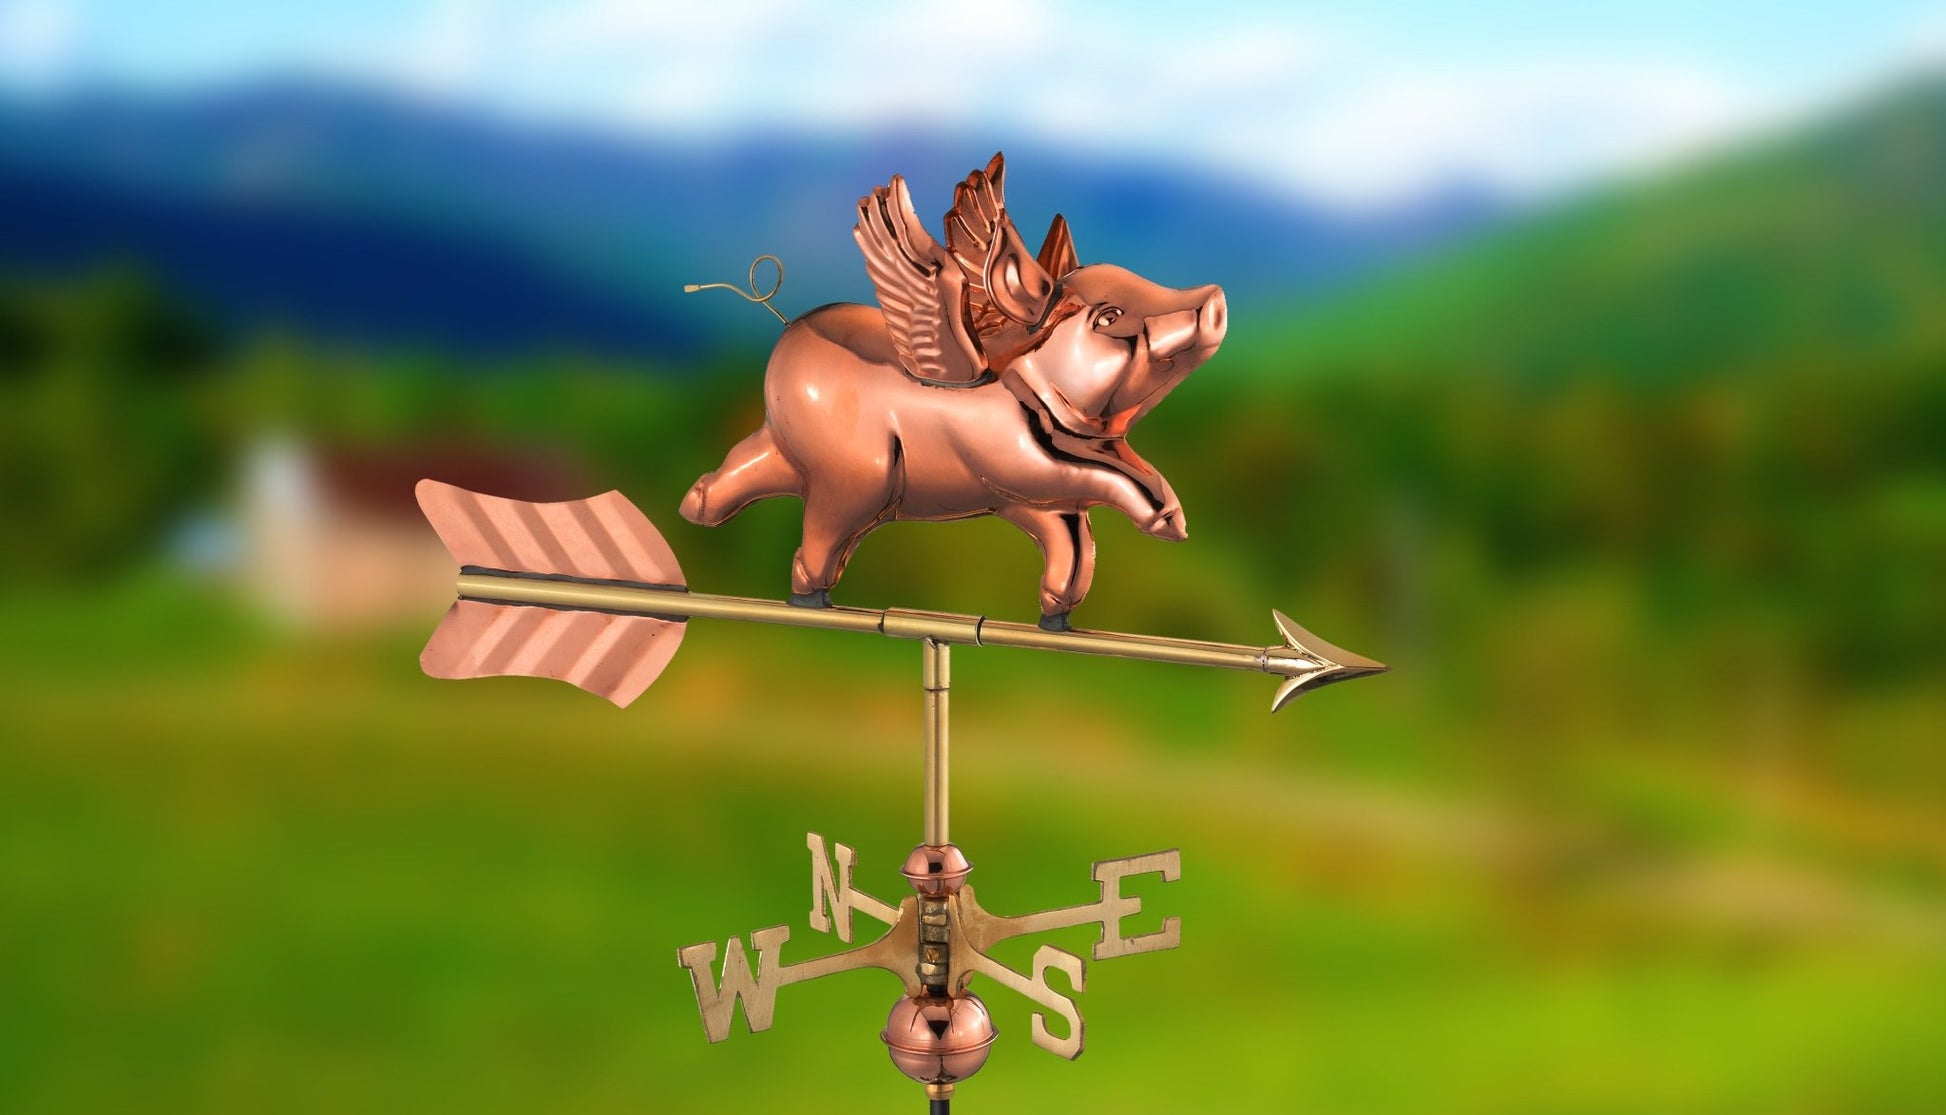 Flying Pig Cottage Weathervane - Good Directions